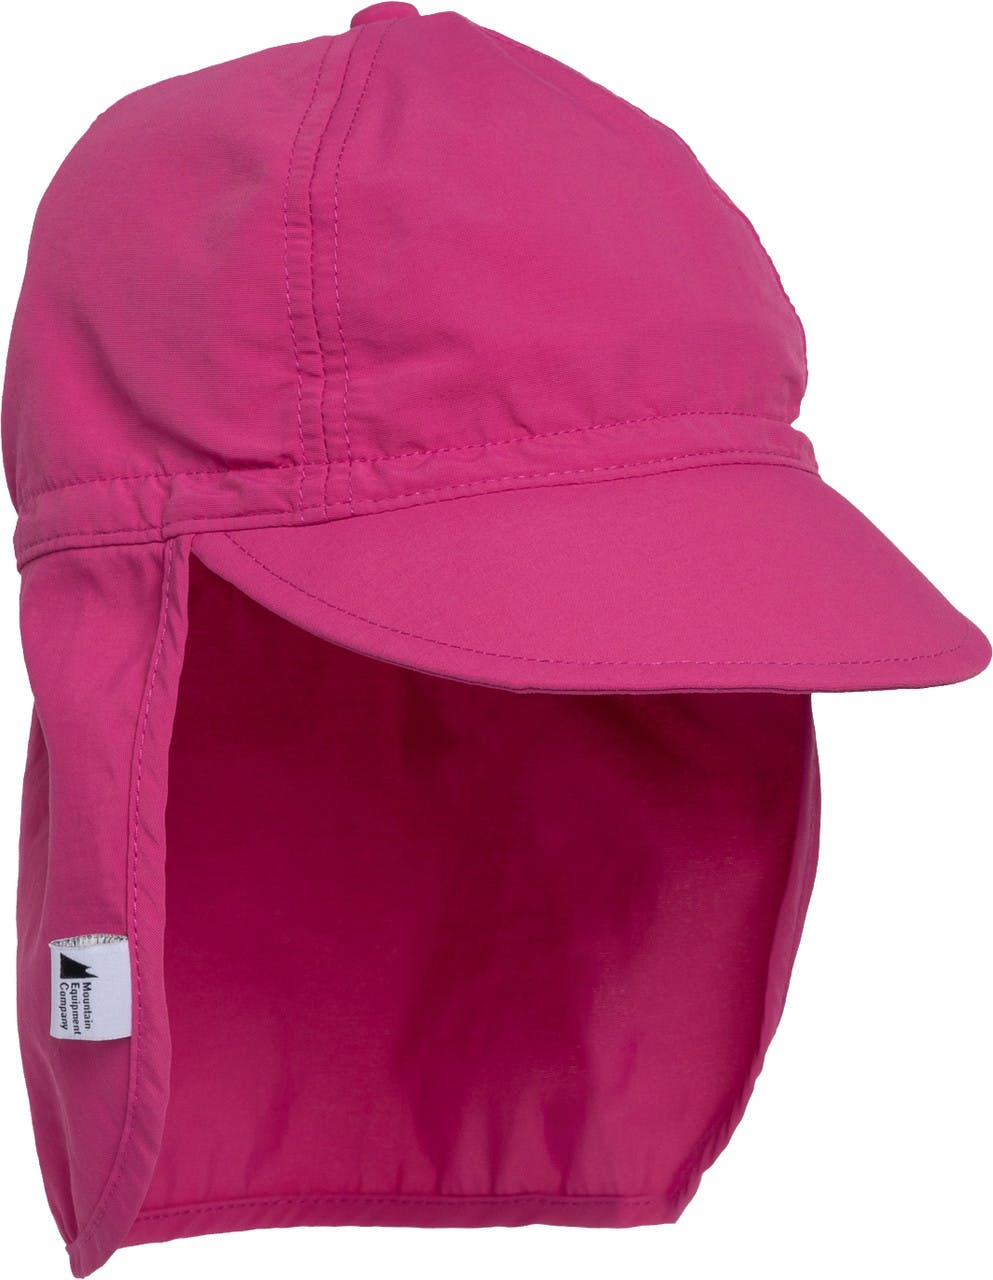 Sunnyday Surfari Sun Hat Passion Pink